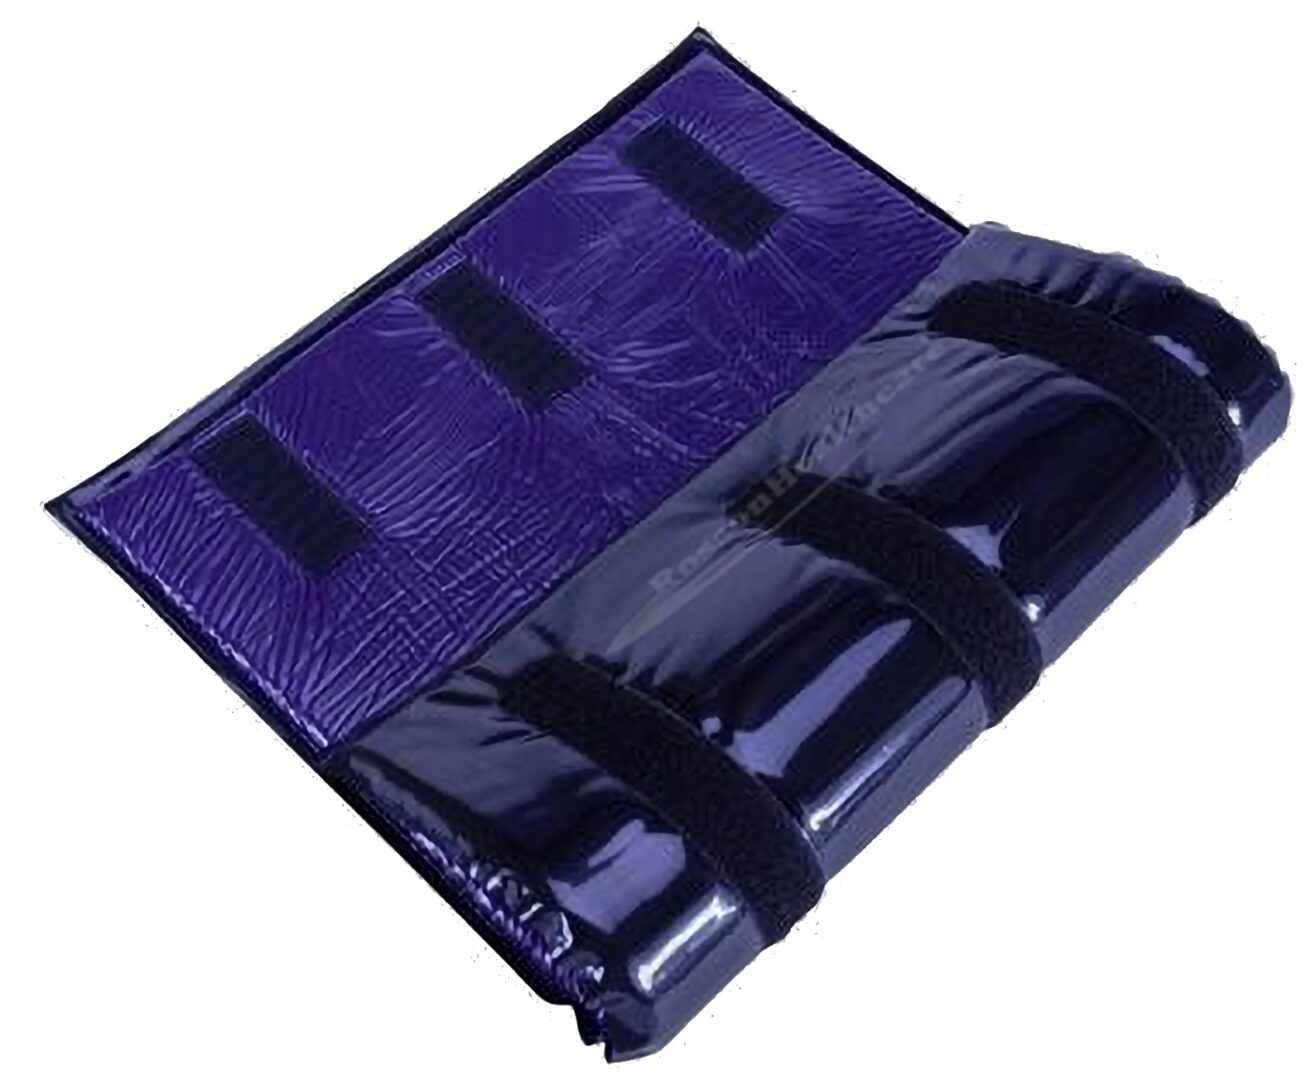 A purple tarp with black straps on it.